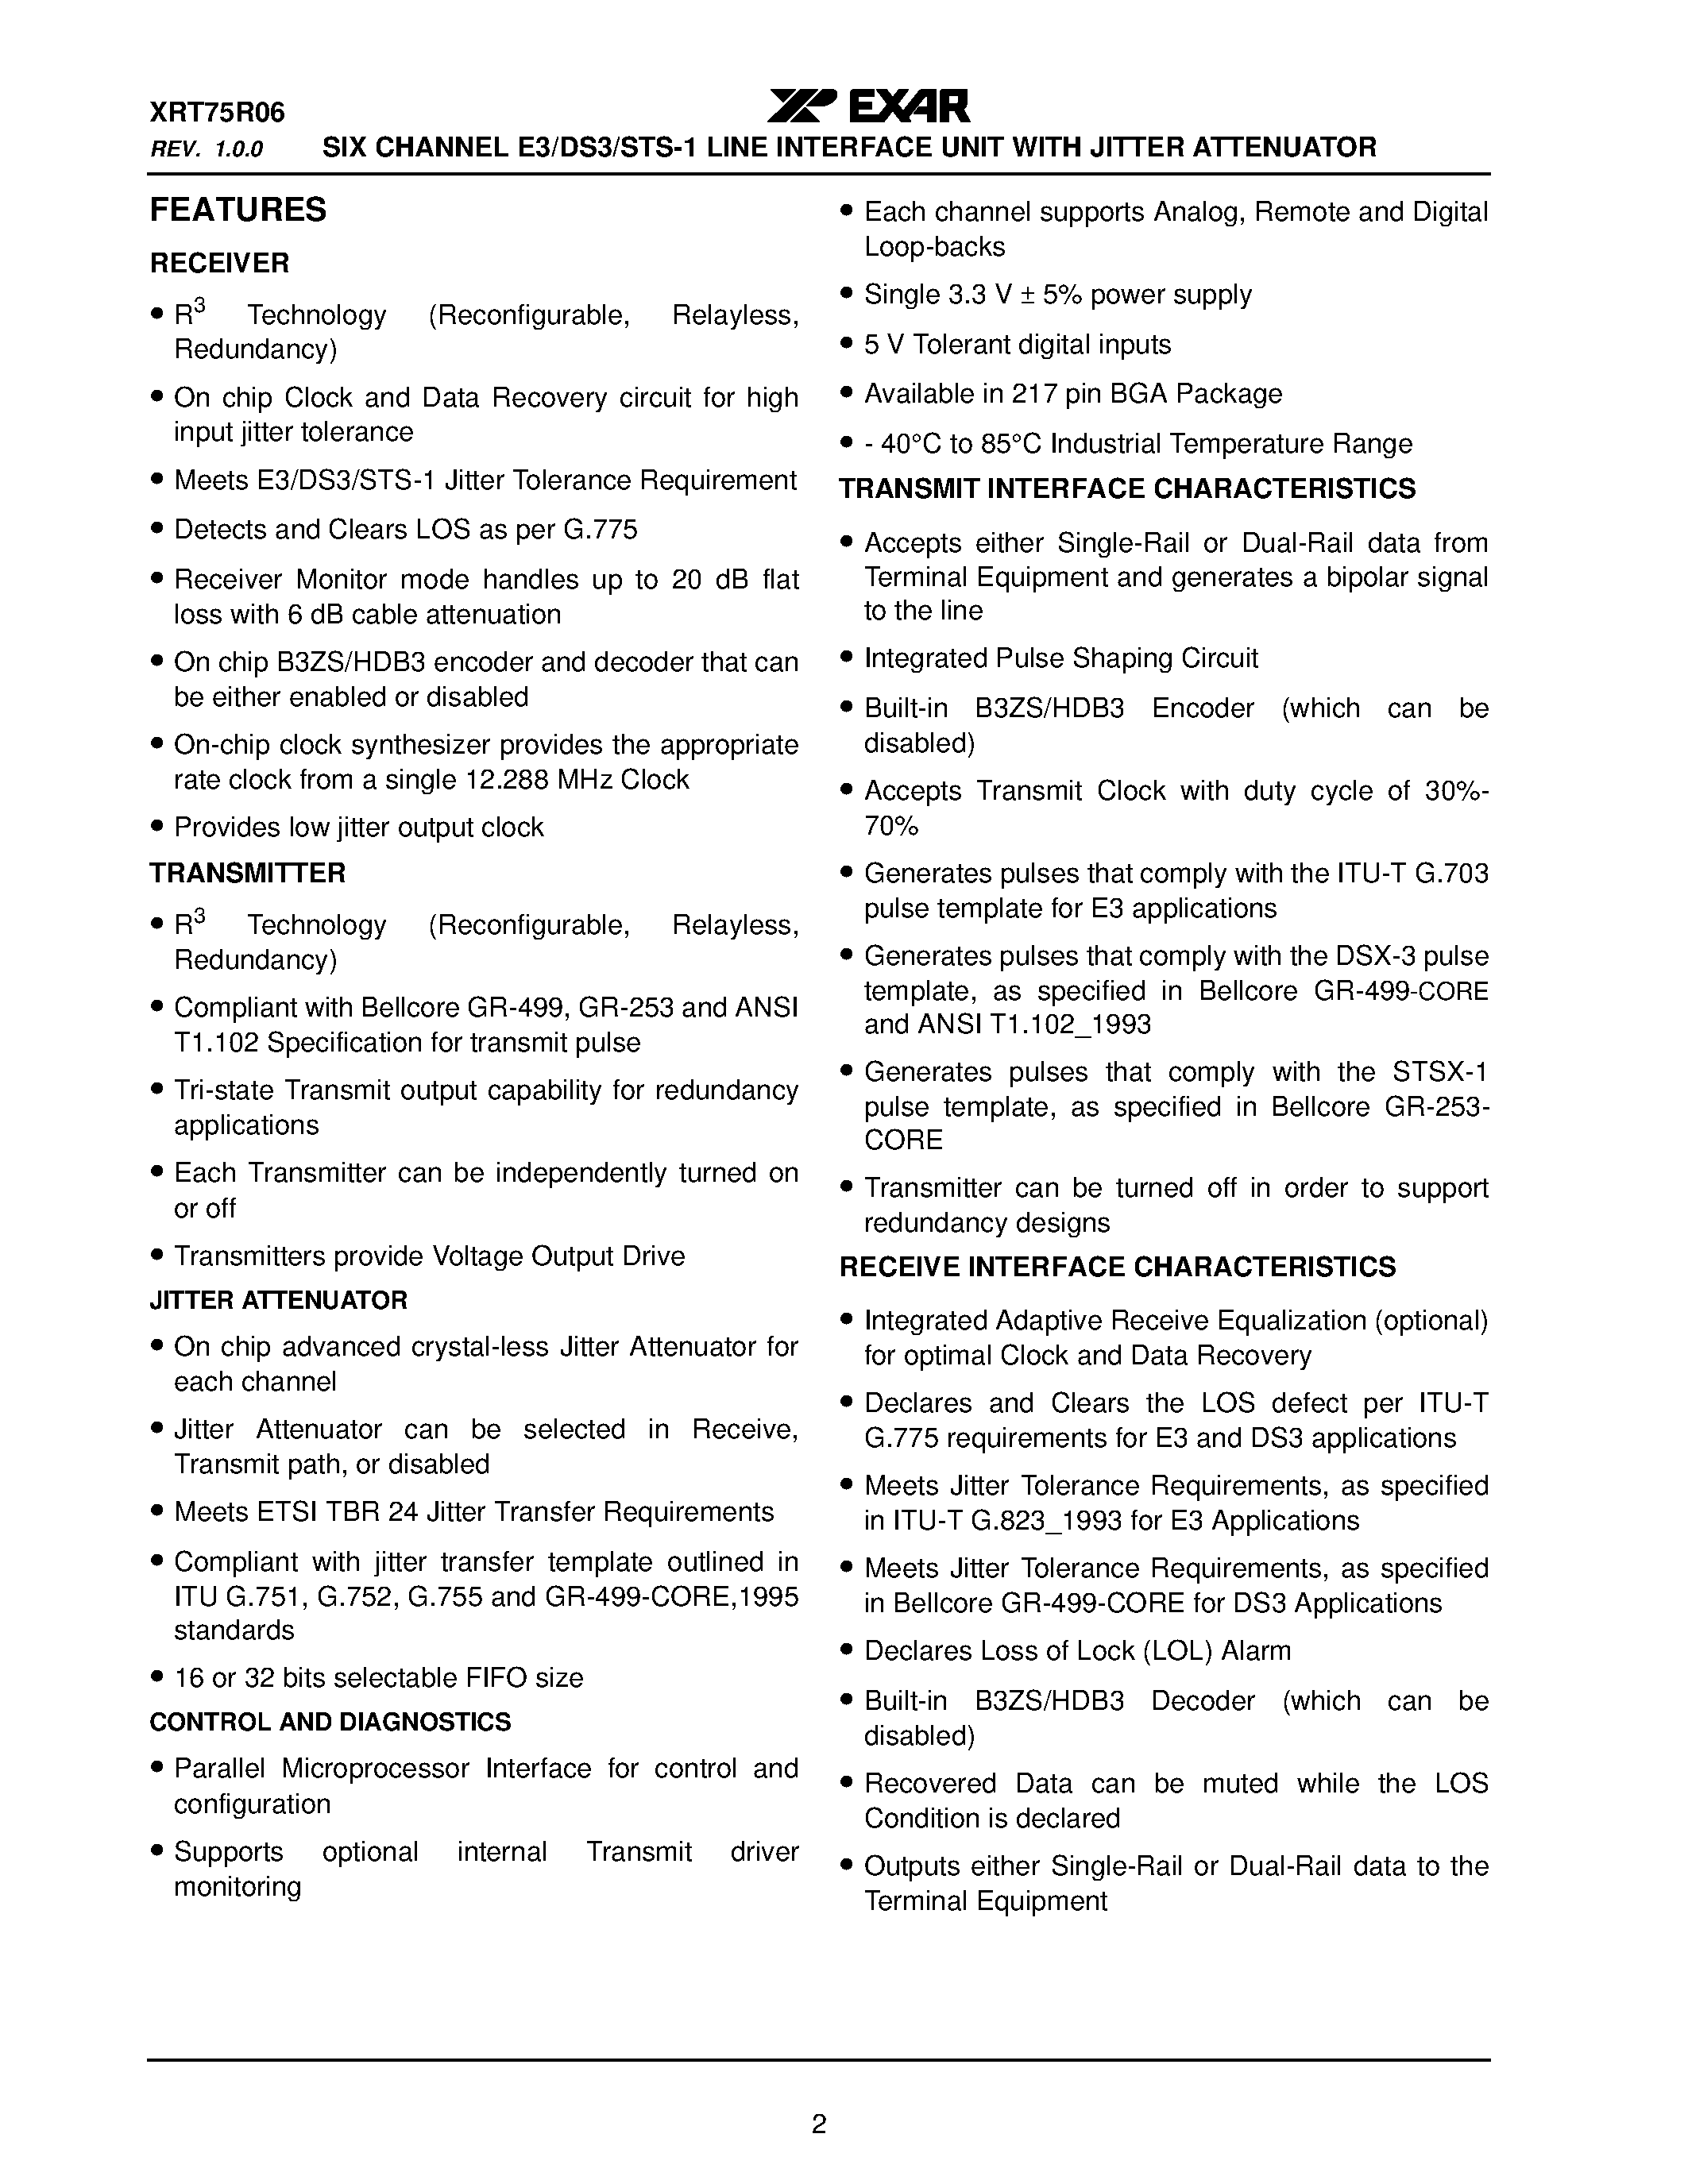 Datasheet XRT75R06 - SIX CHANNEL E3/DS3/STS-1 LINE INTERFACE UNIT page 2